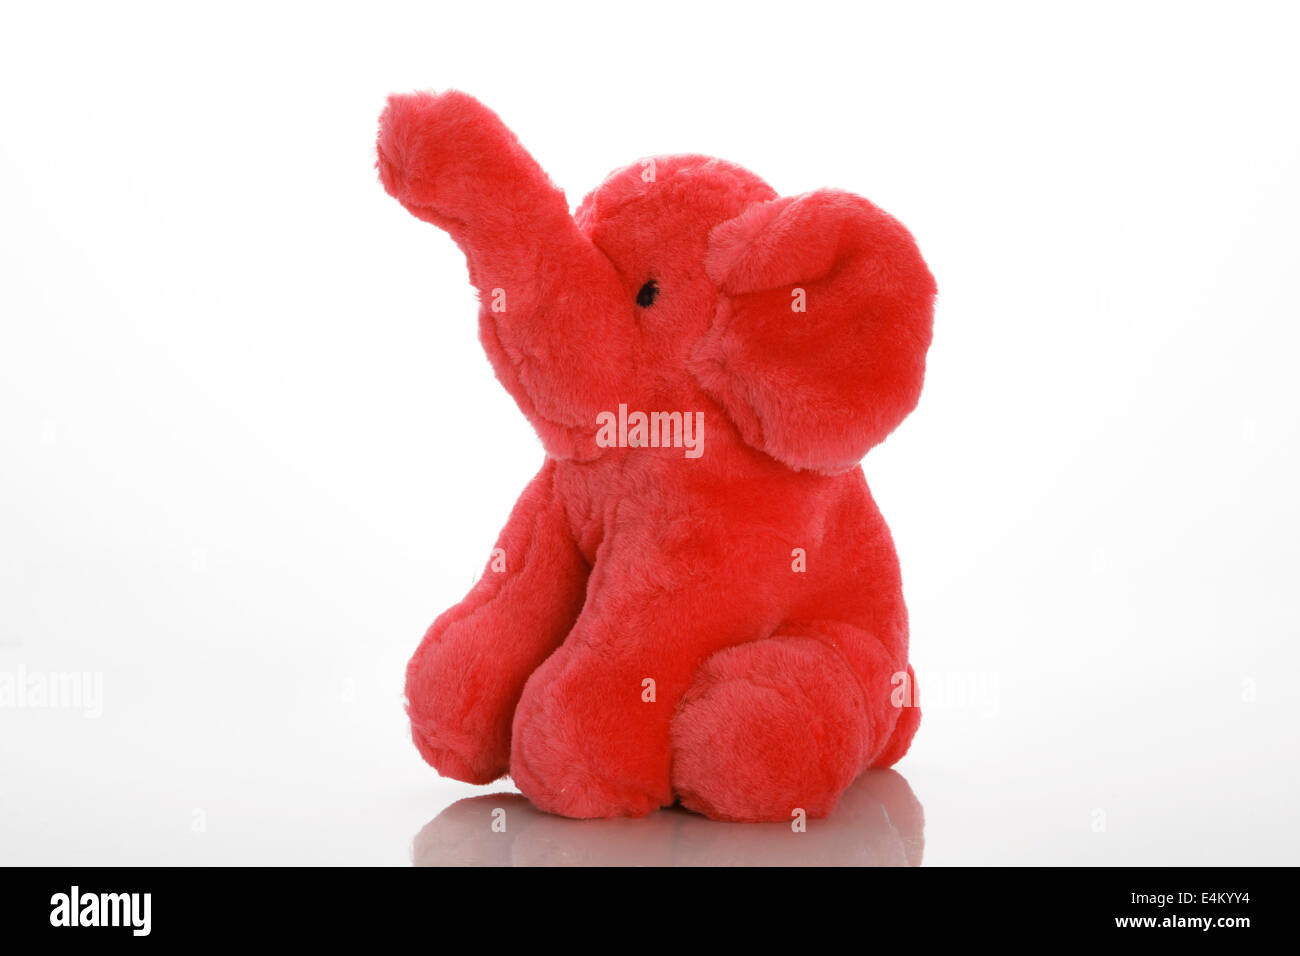 a red stuffed elephant toy bear Stock Photo